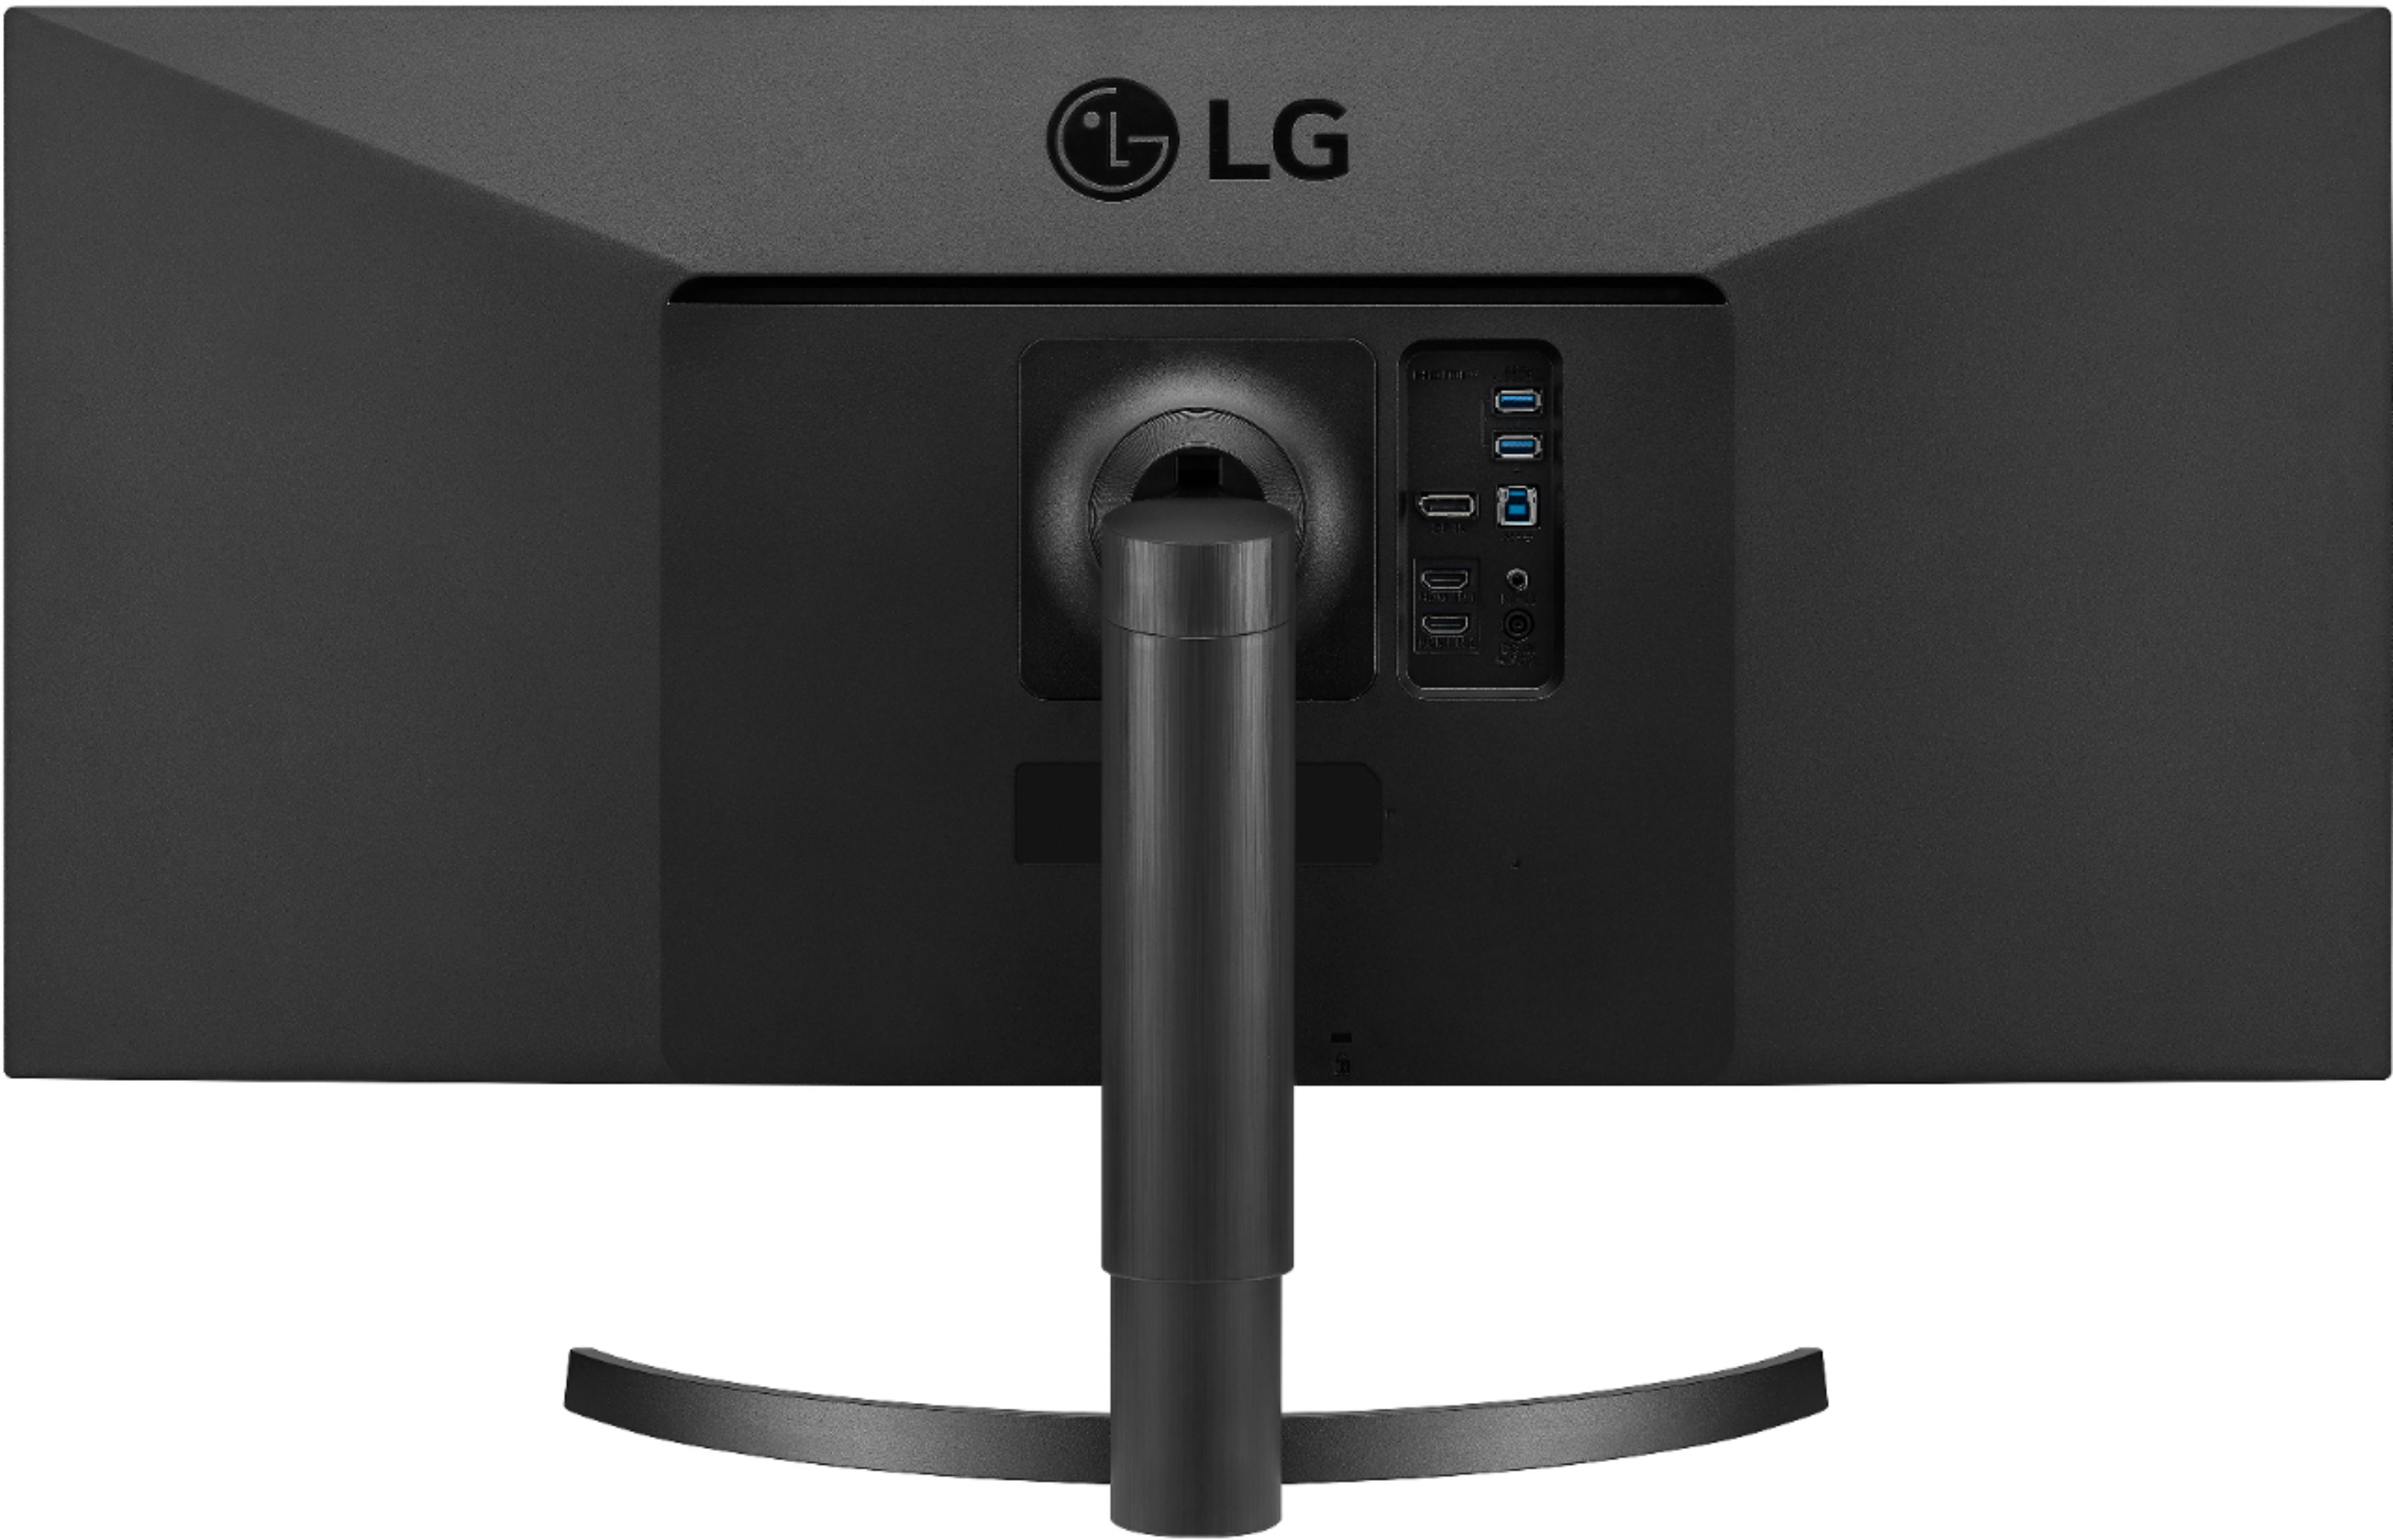 LG 34 IPS LED UltraWide FHD 100Hz AMD FreeSync Monitor with HDR (HDMI,  DisplayPort) Black 34WQ500-B - Best Buy